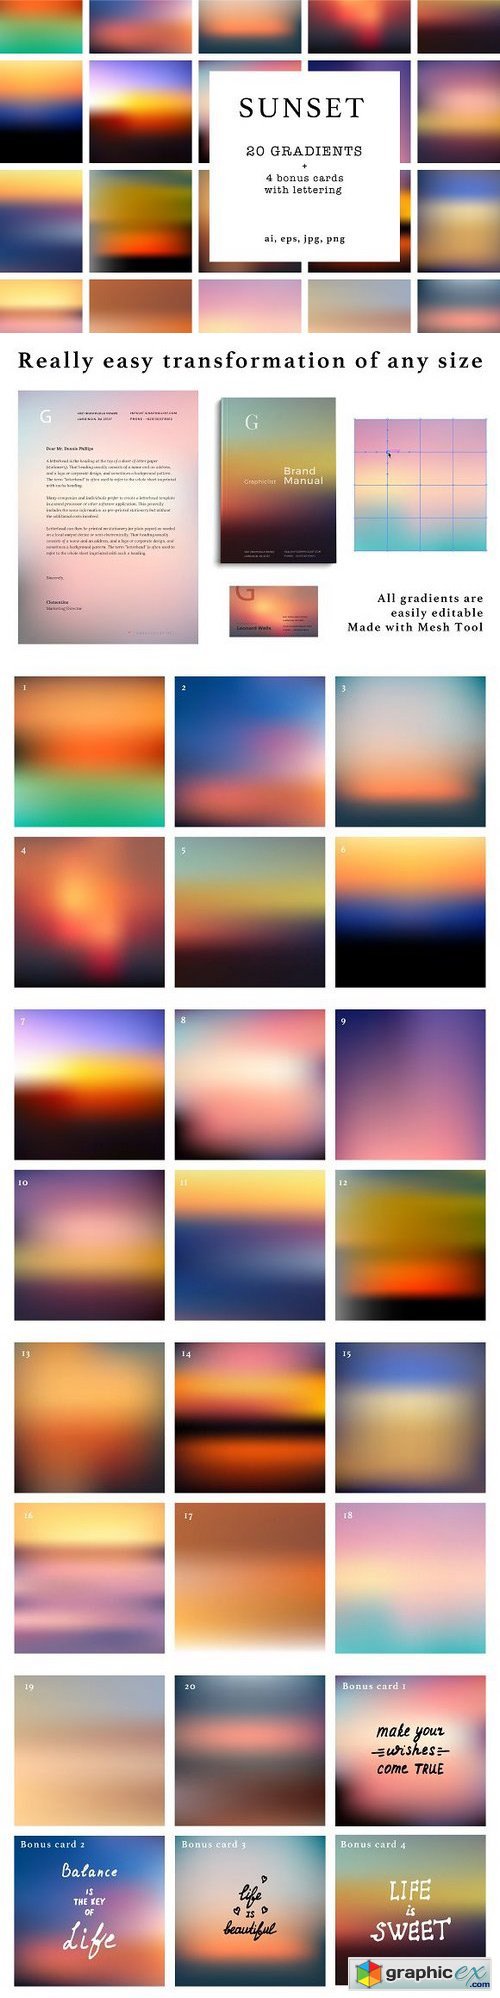 20 sunset gradients + 4 bonus card